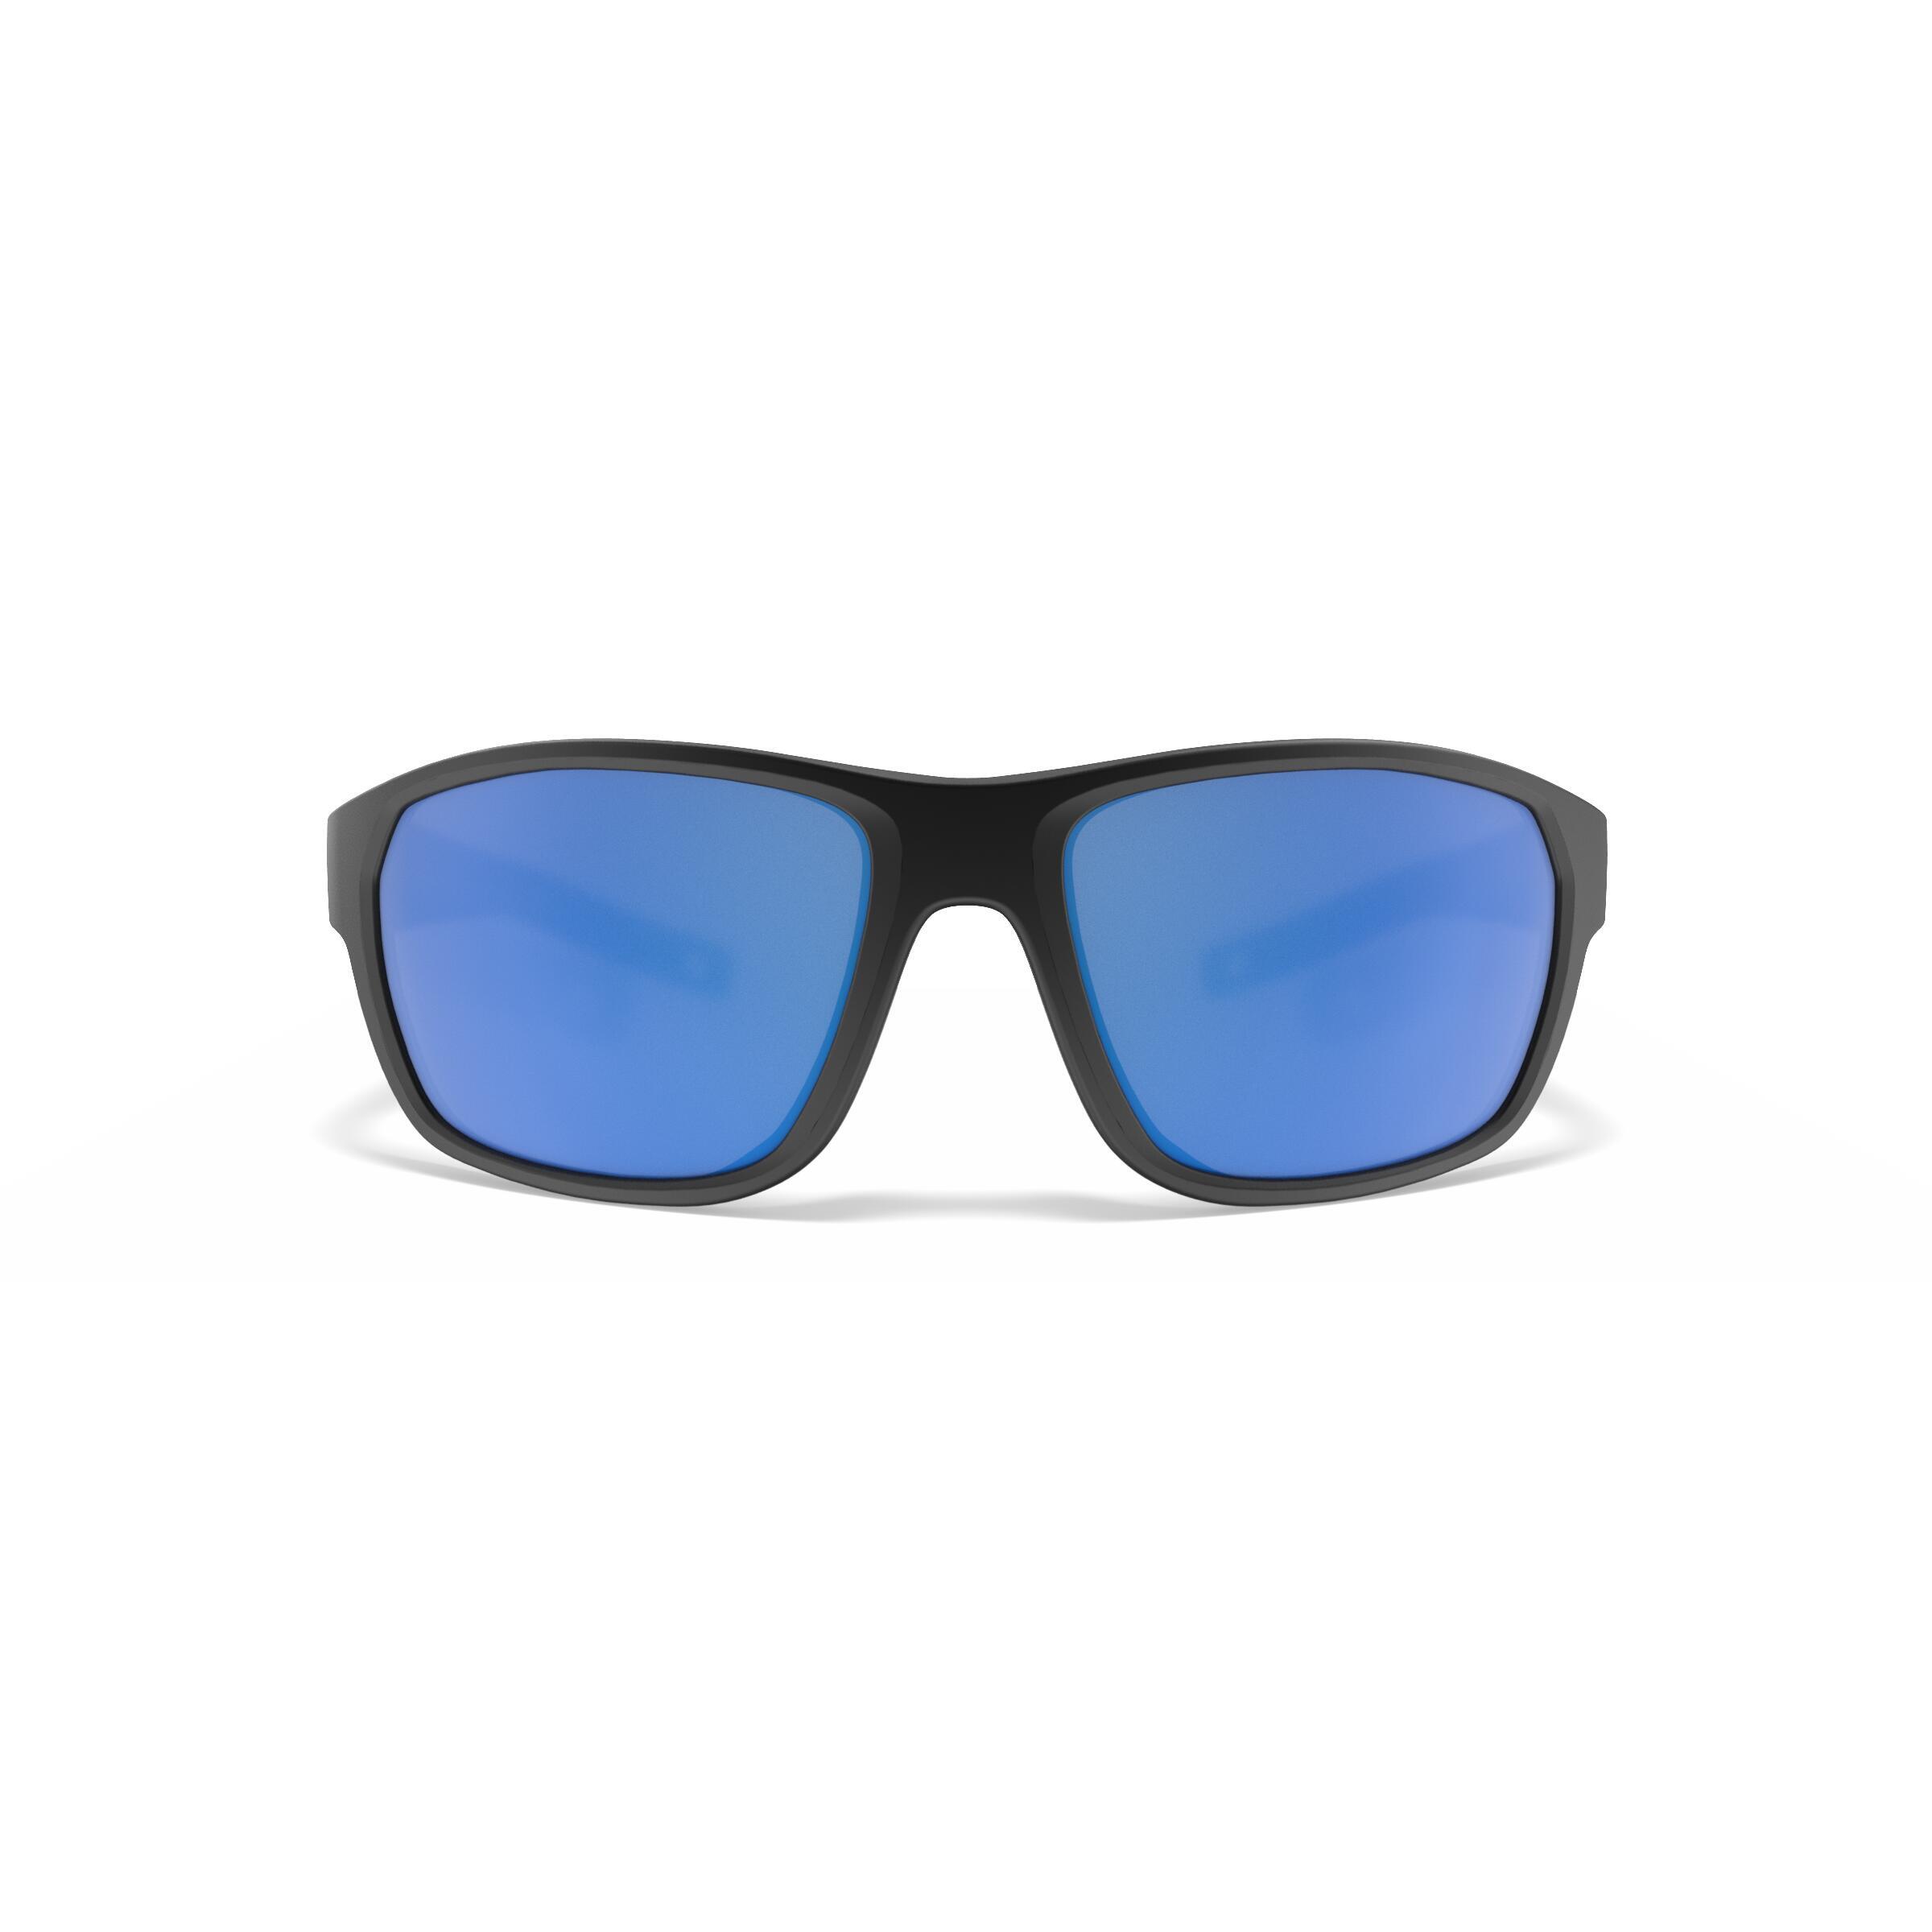 Adult Sailing Floating Polarised Sunglasses 500 - Size M Black 7/13